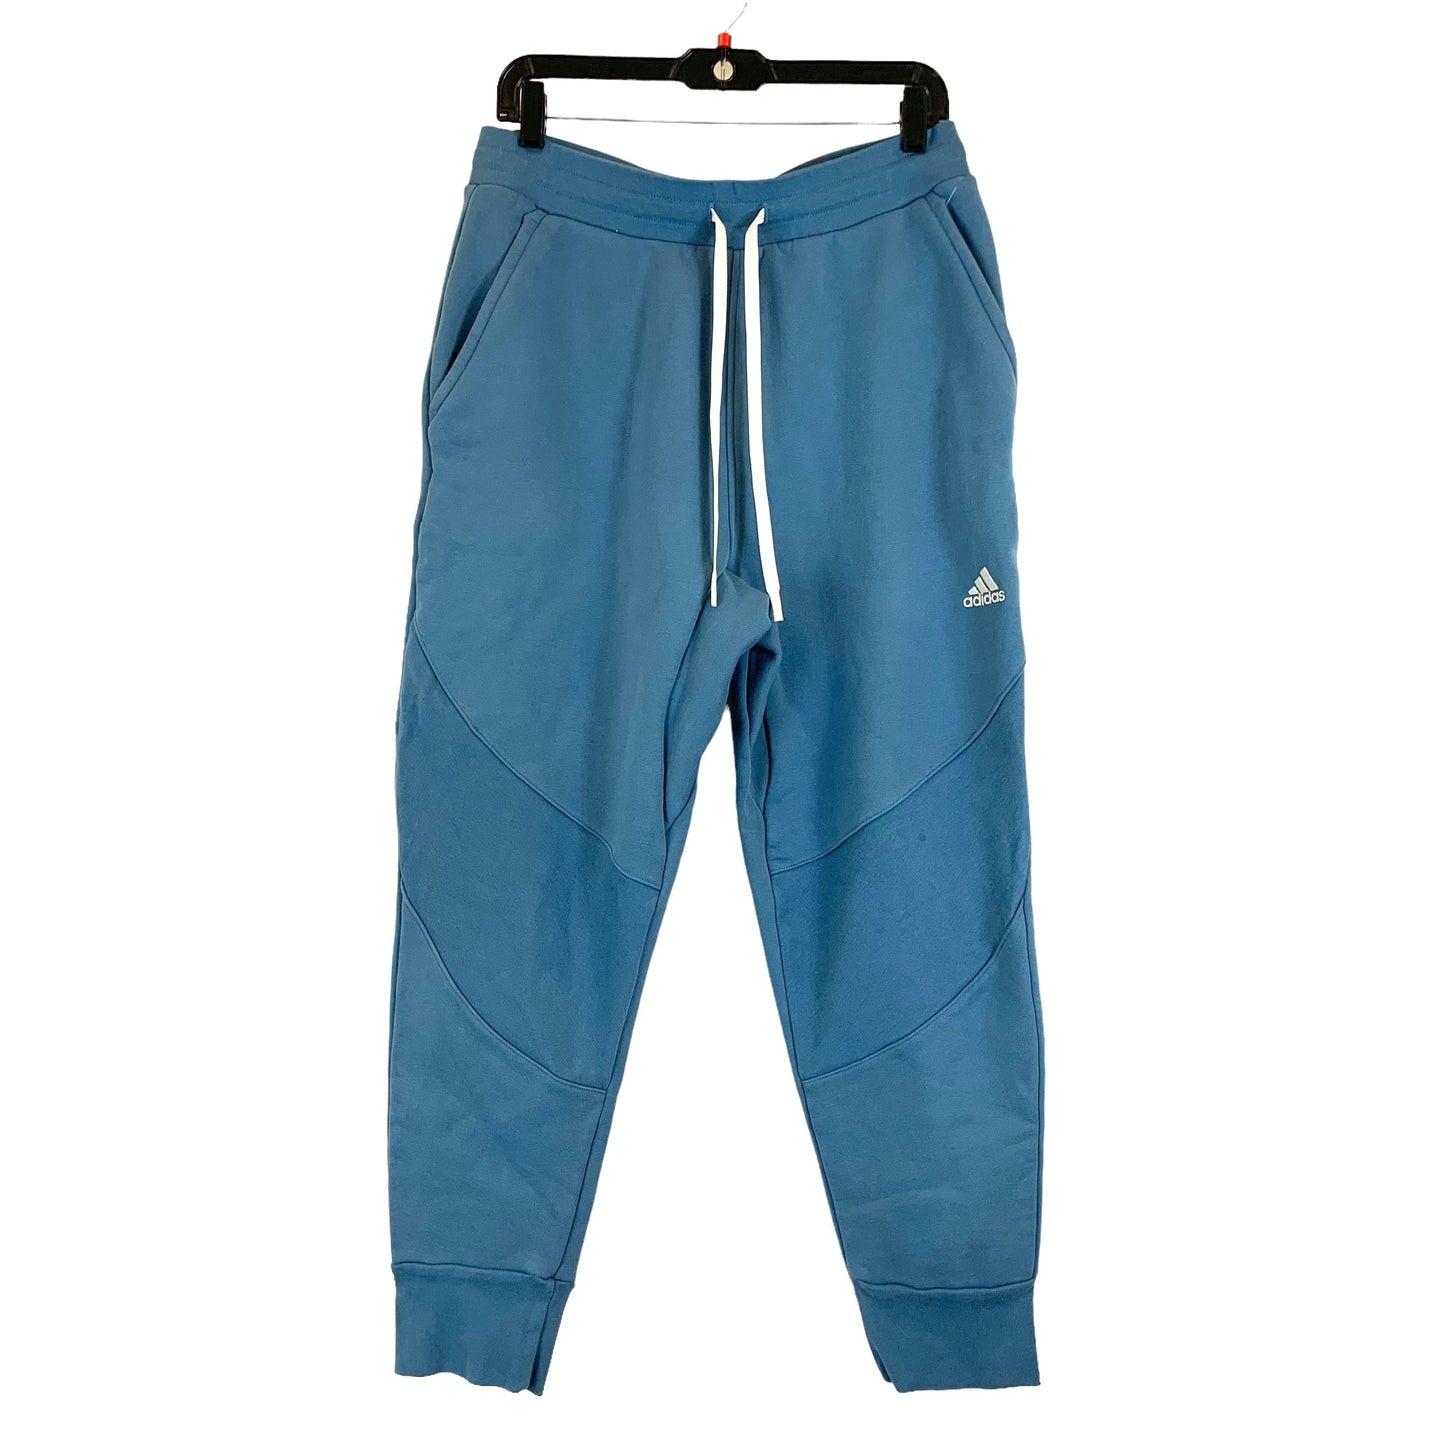 Blue Athletic Pants Adidas, Size L